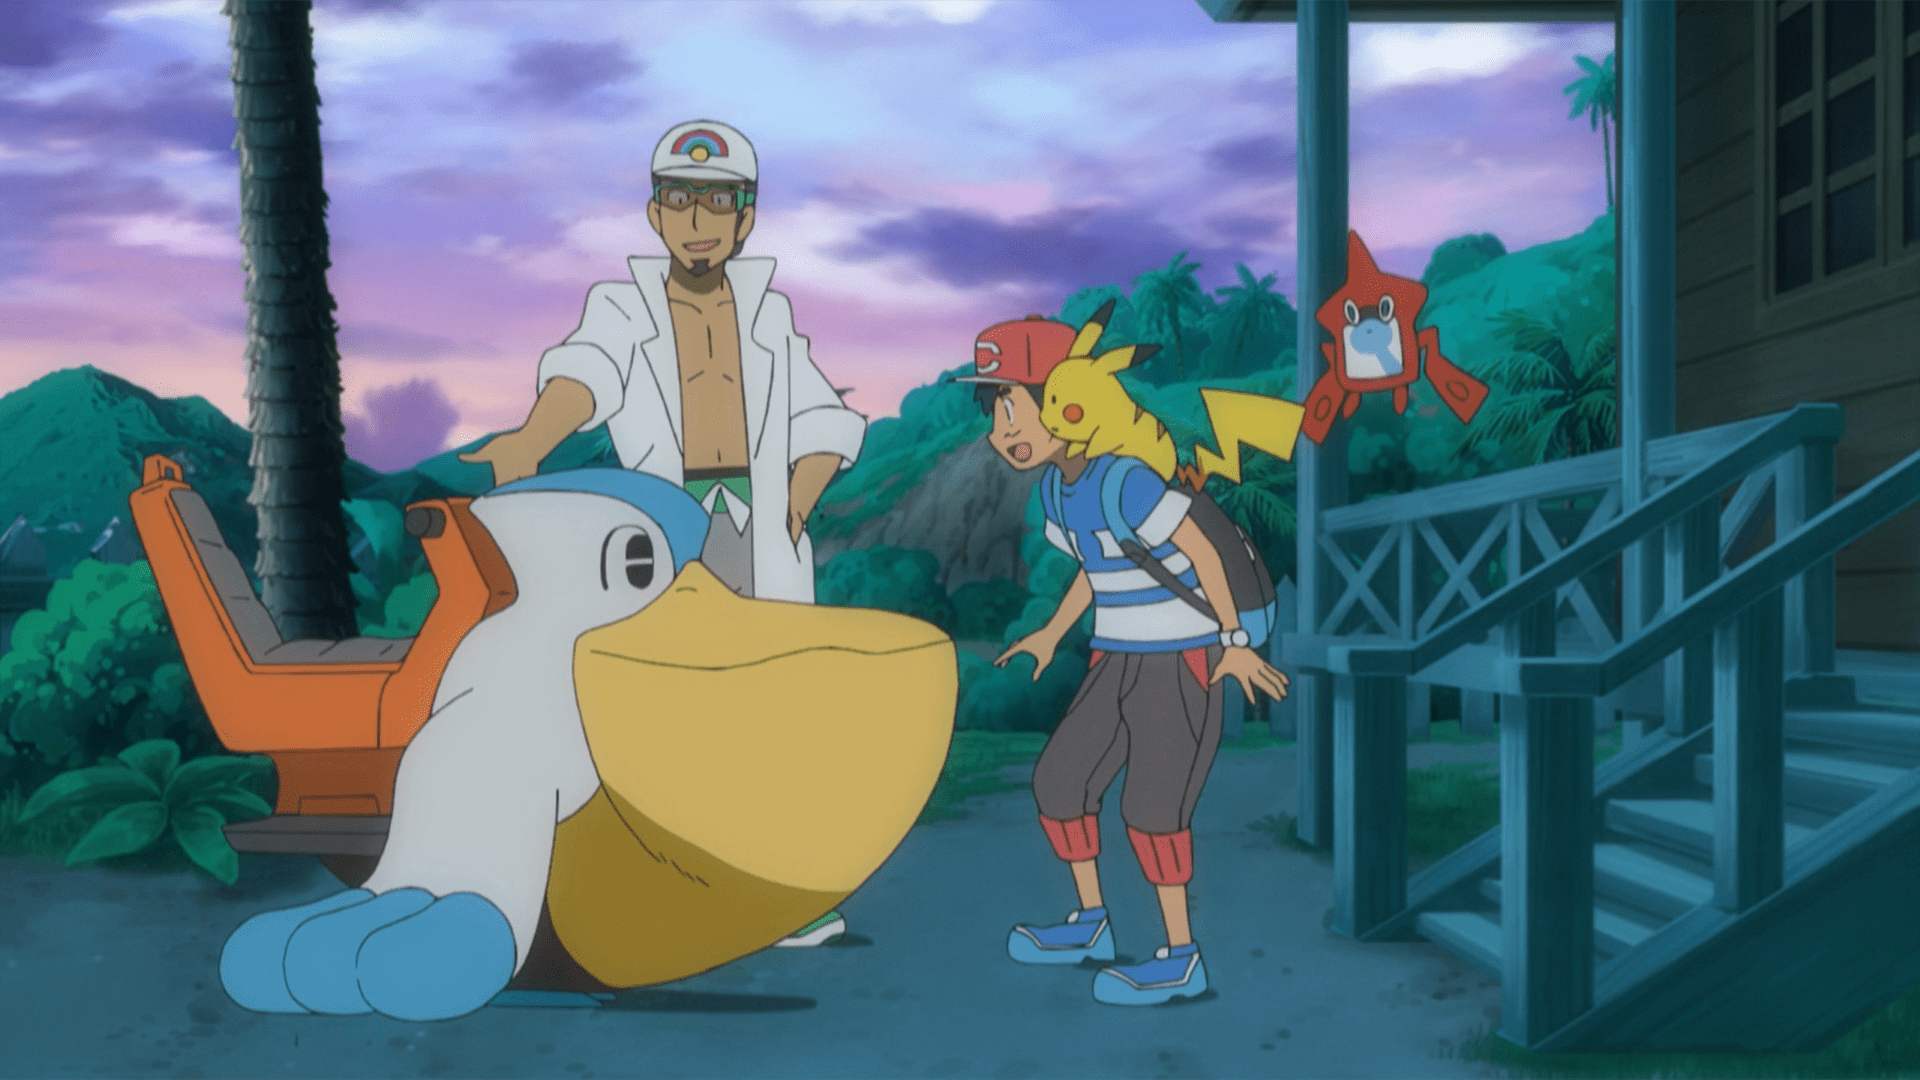 File:Ash Pikachu.png - Bulbapedia, the community-driven Pokémon encyclopedia